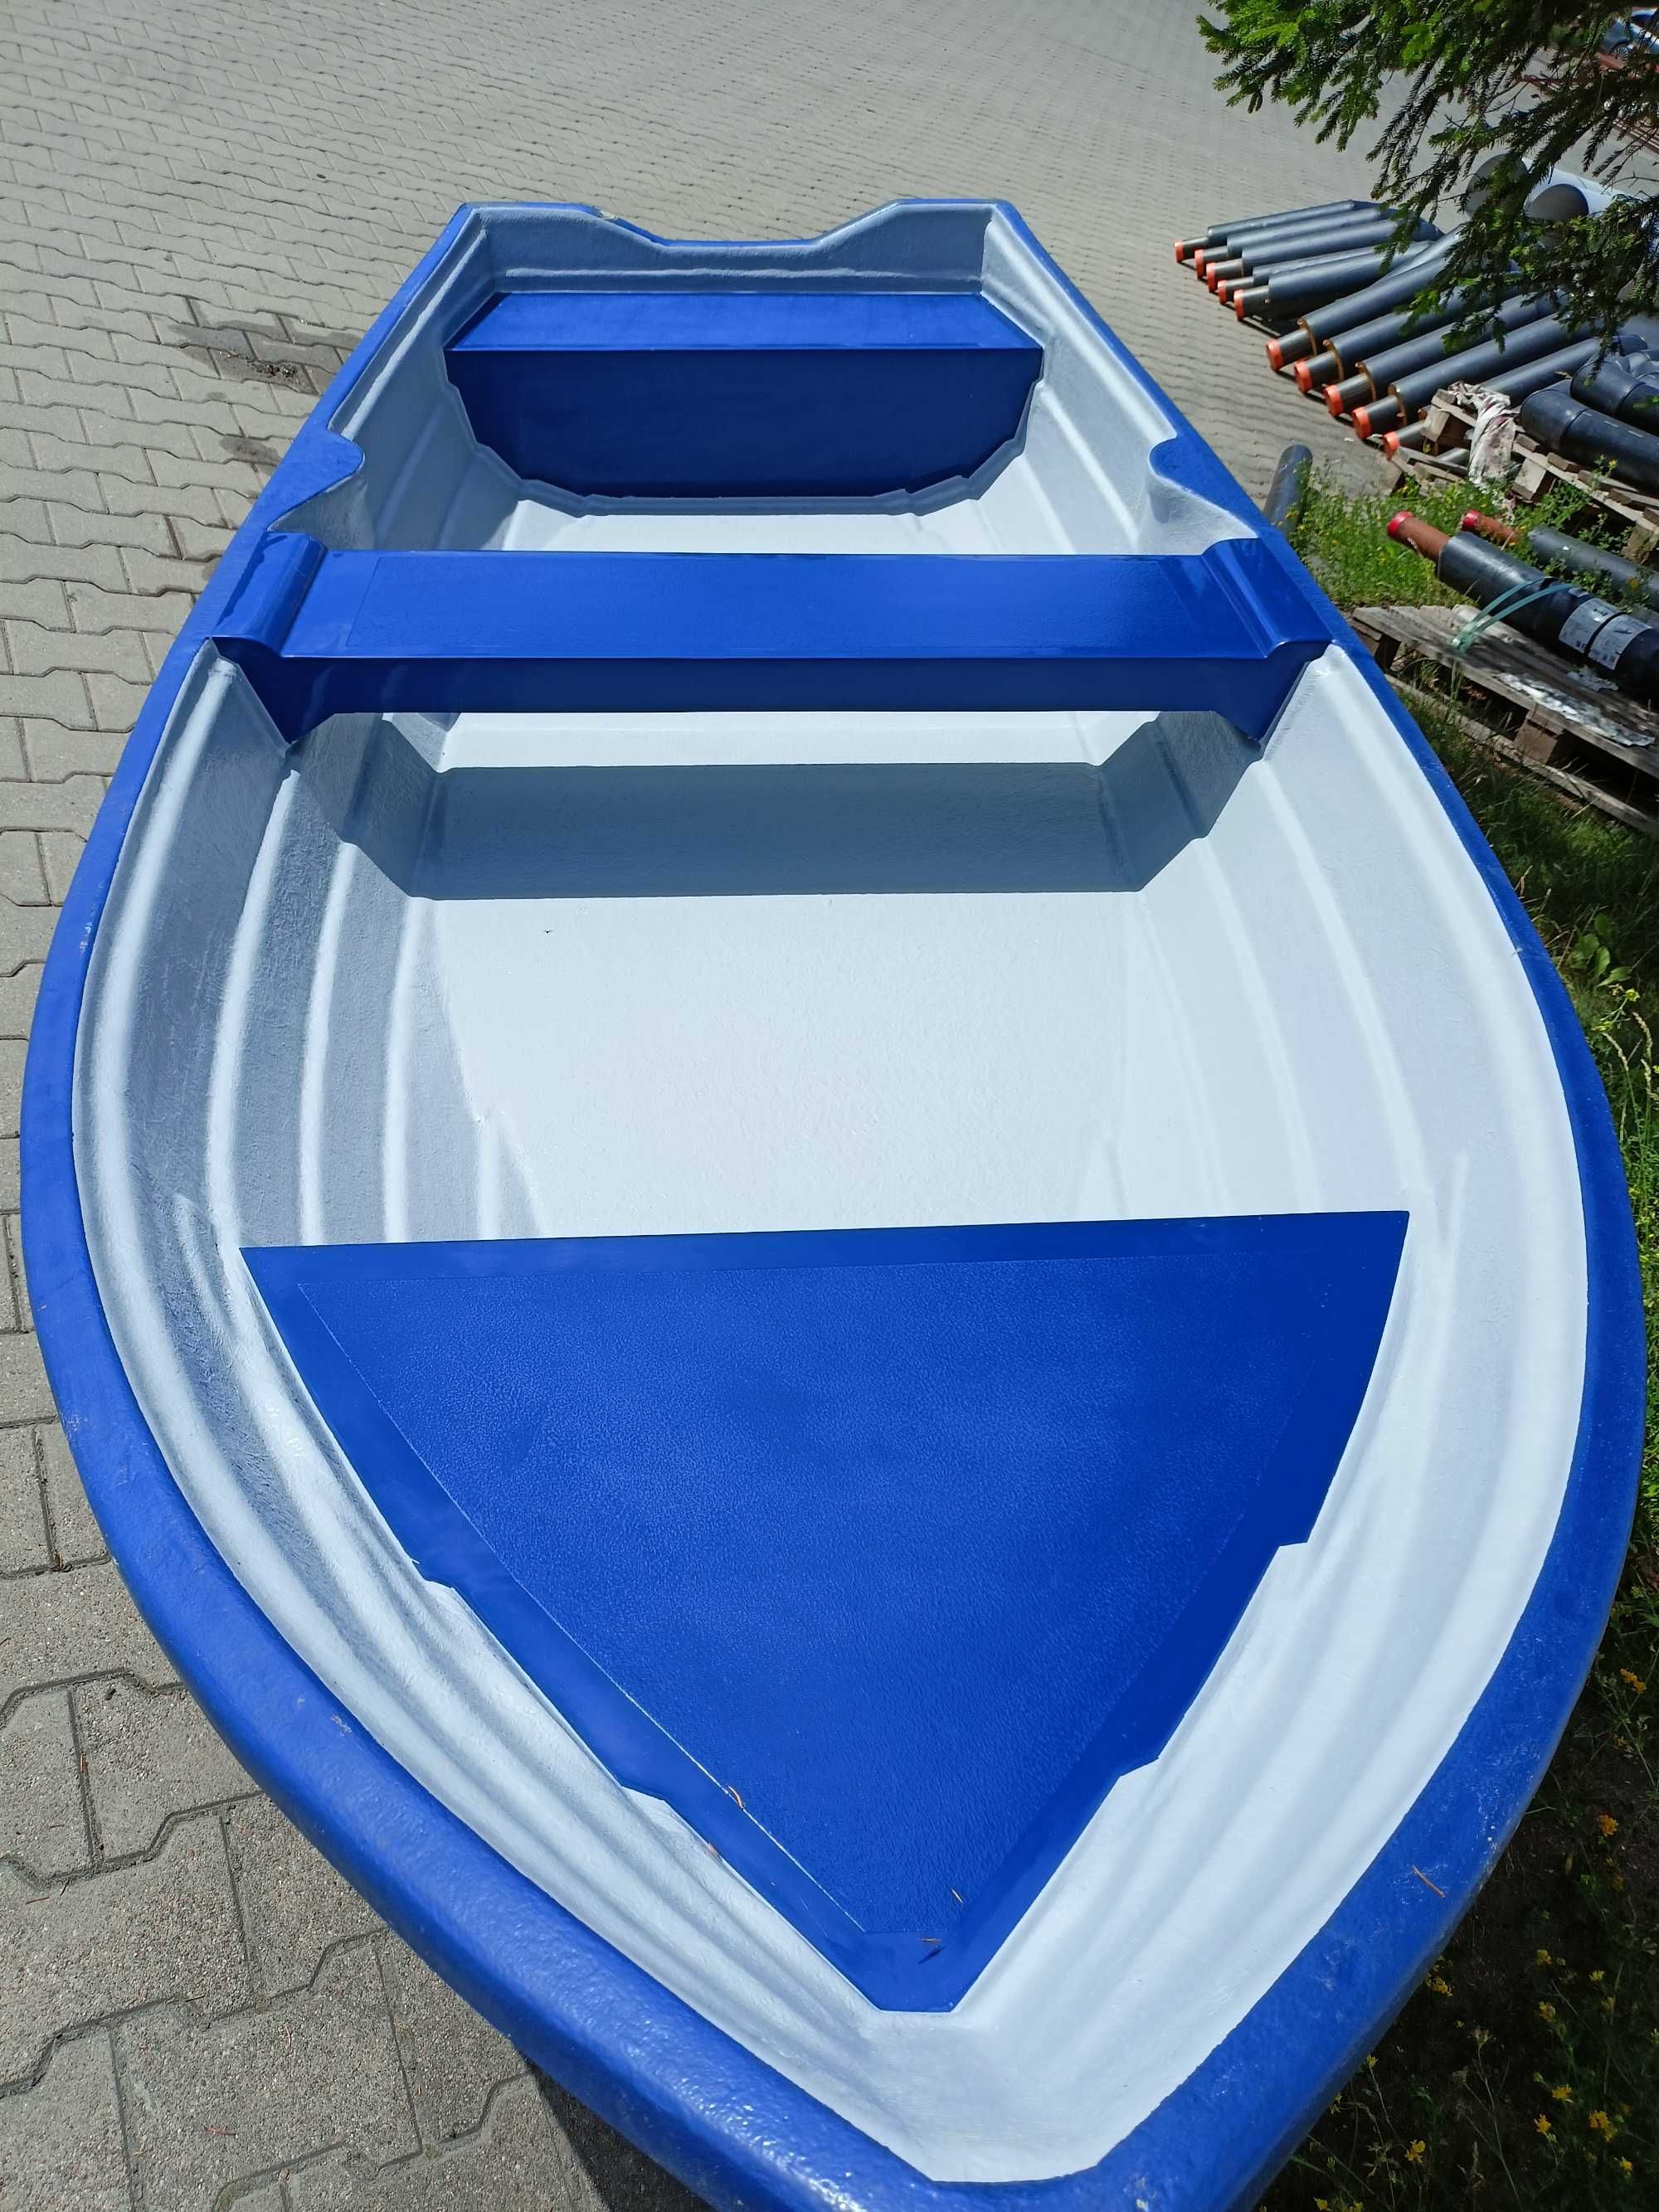 łódka wędkarska wiosłowa 3,8m